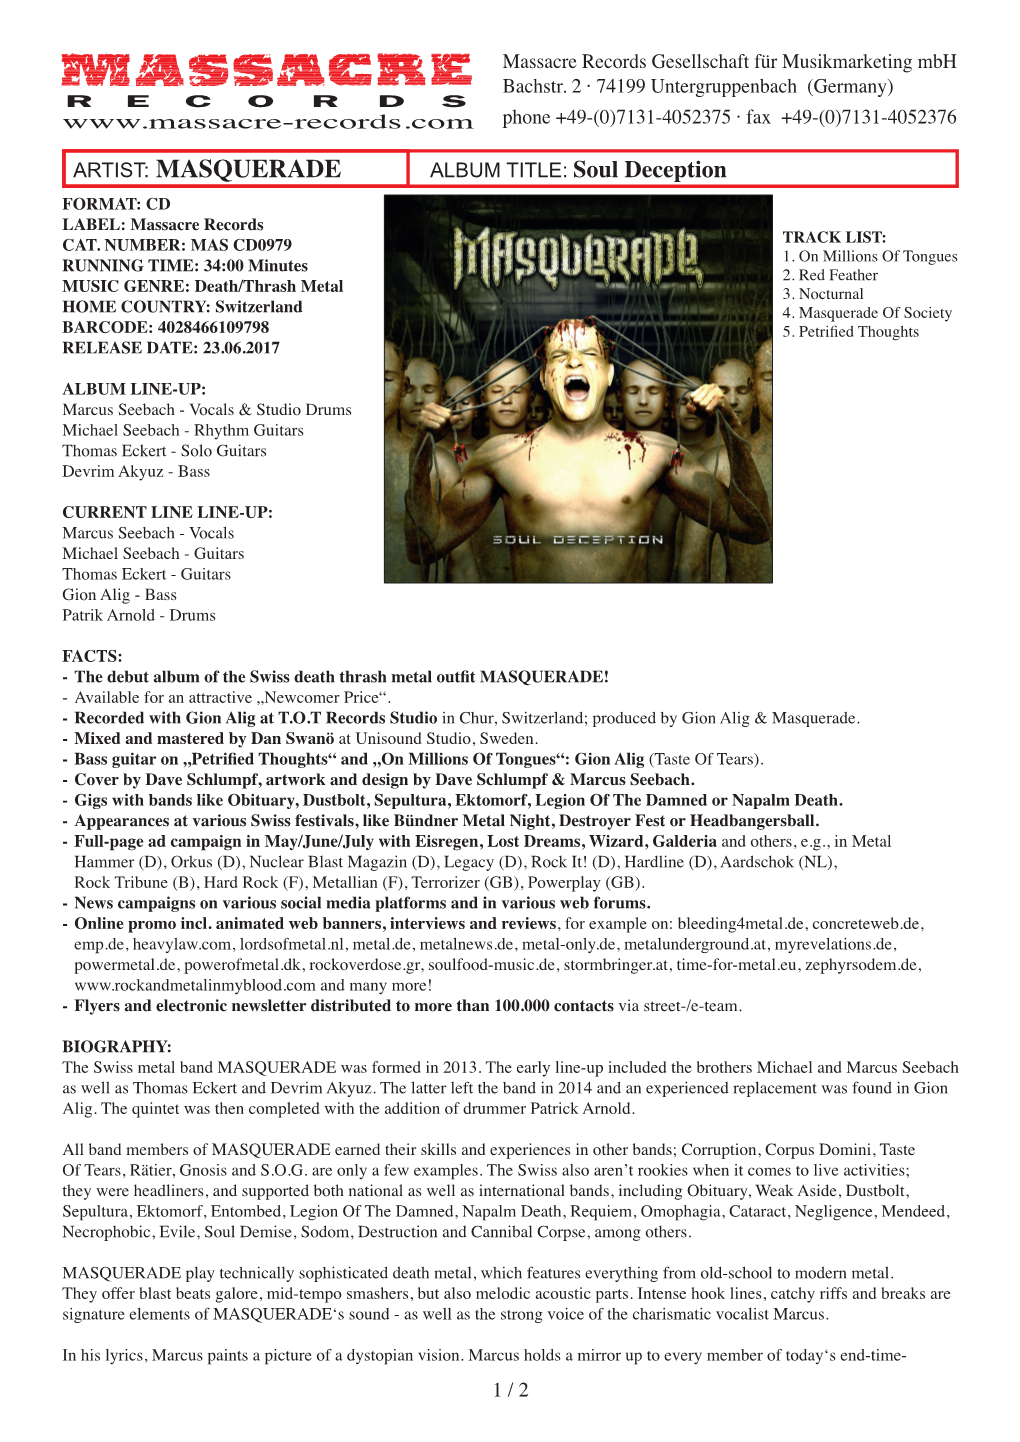 MASQUERADE ALBUM TITLE: Soul Deception FORMAT: CD LABEL: Massacre Records CAT